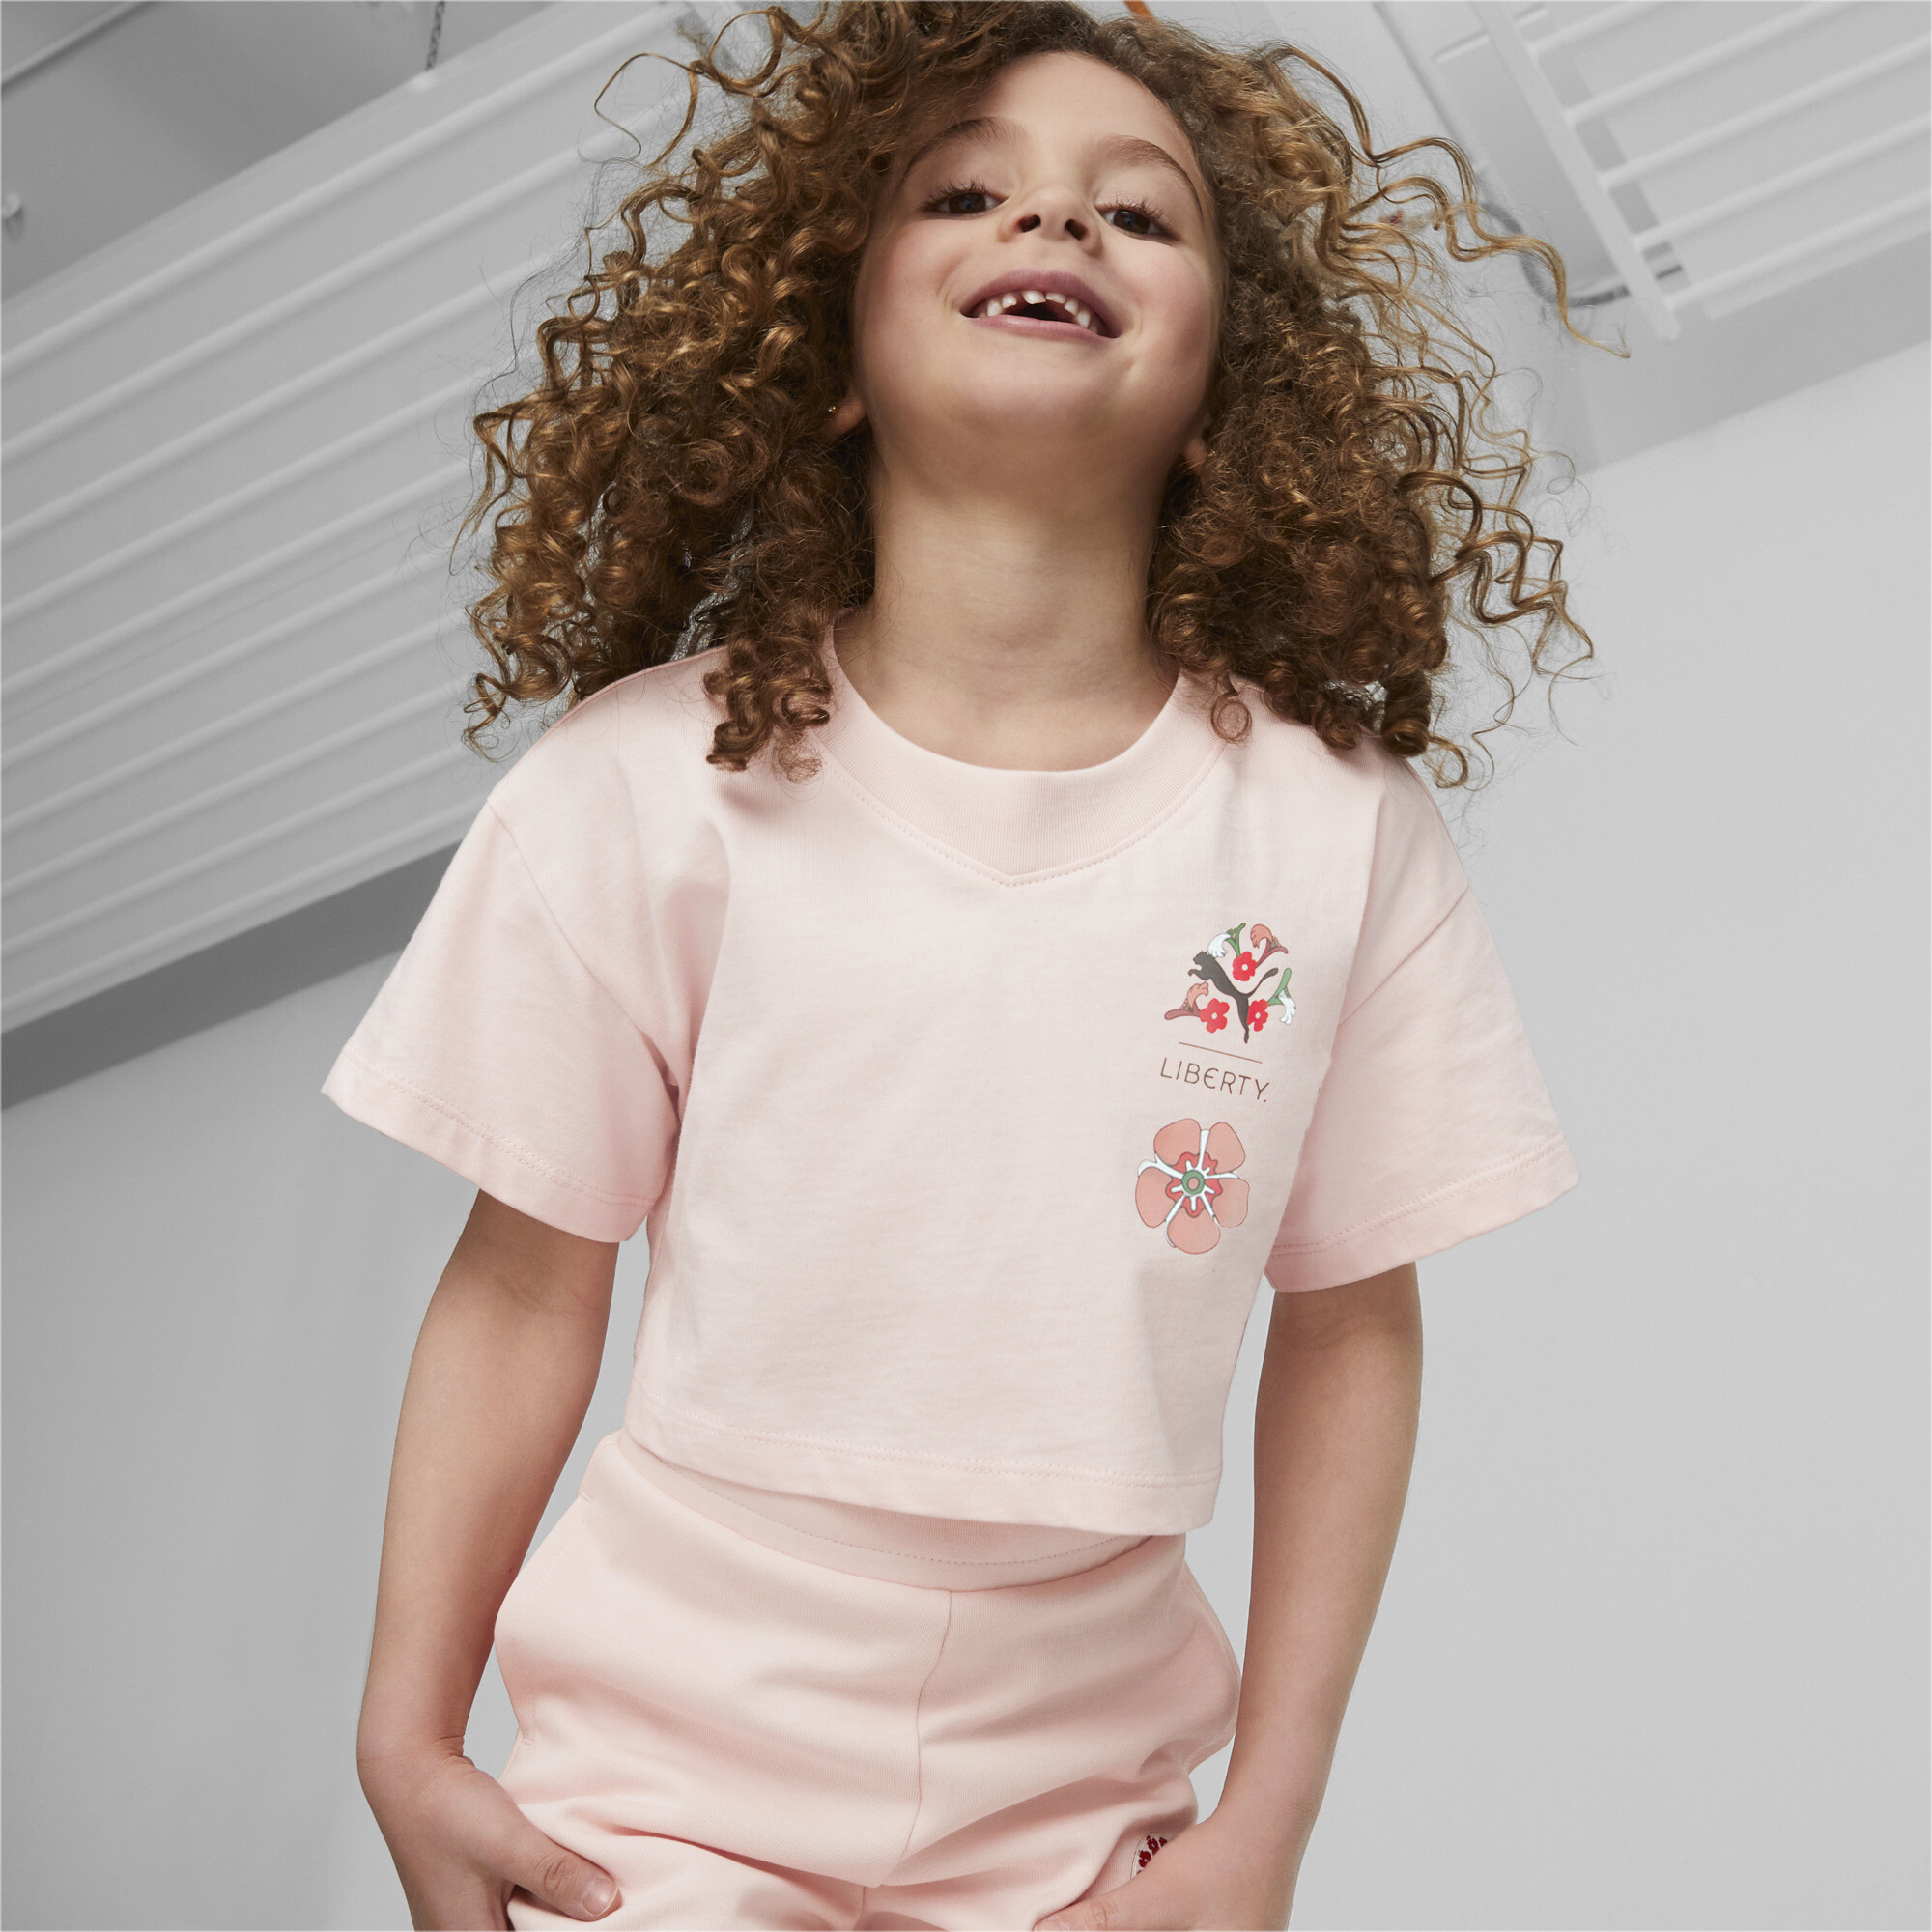 PUMA X LIBERTY T-Shirt Kids In Pink, Size 7-8 Youth